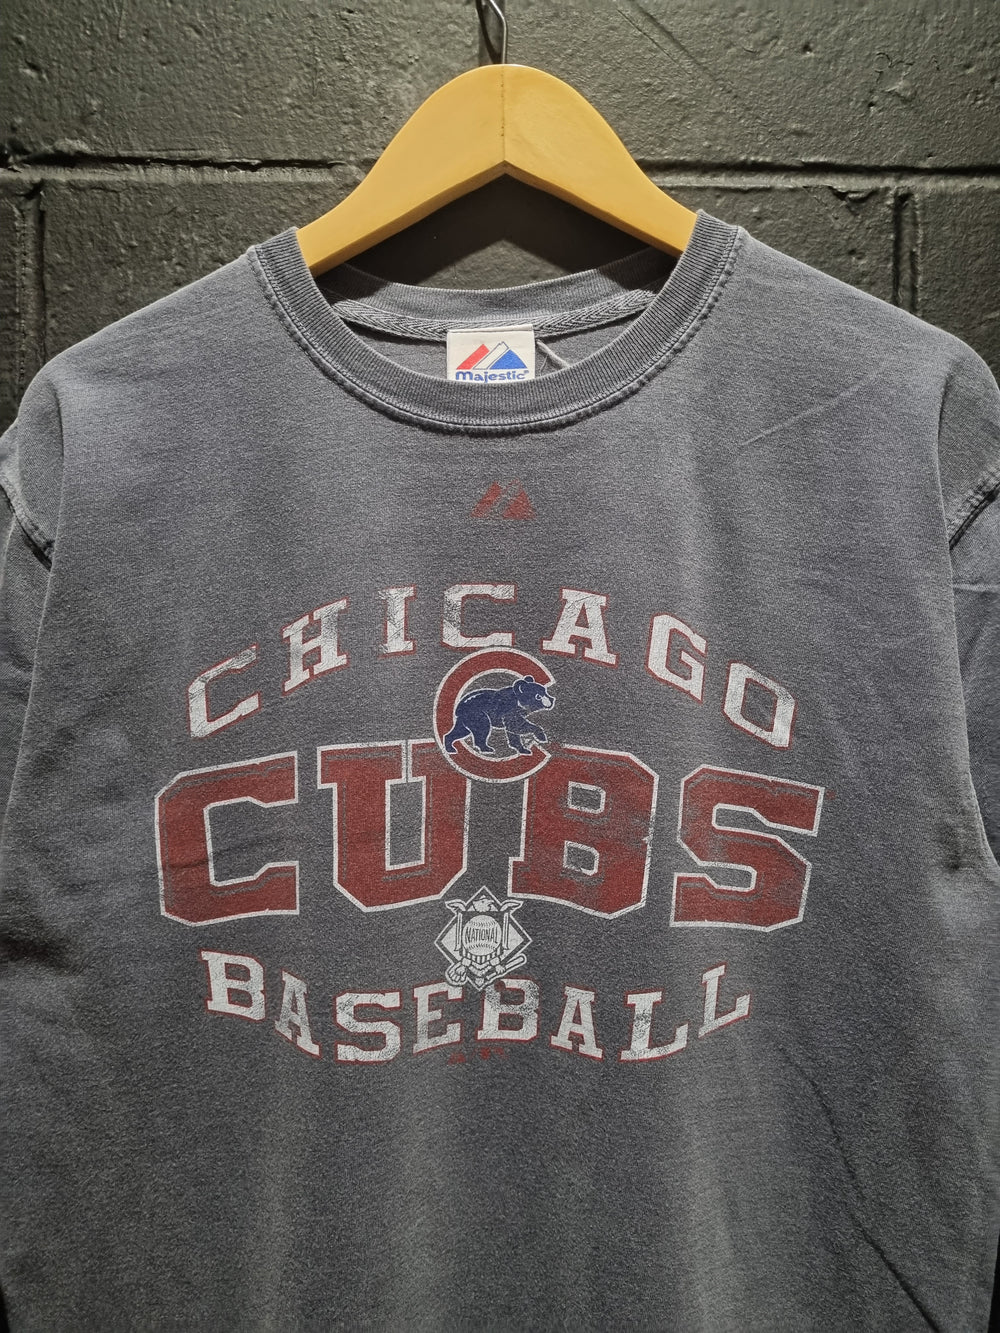 Chicago Cubs Baseball Medium